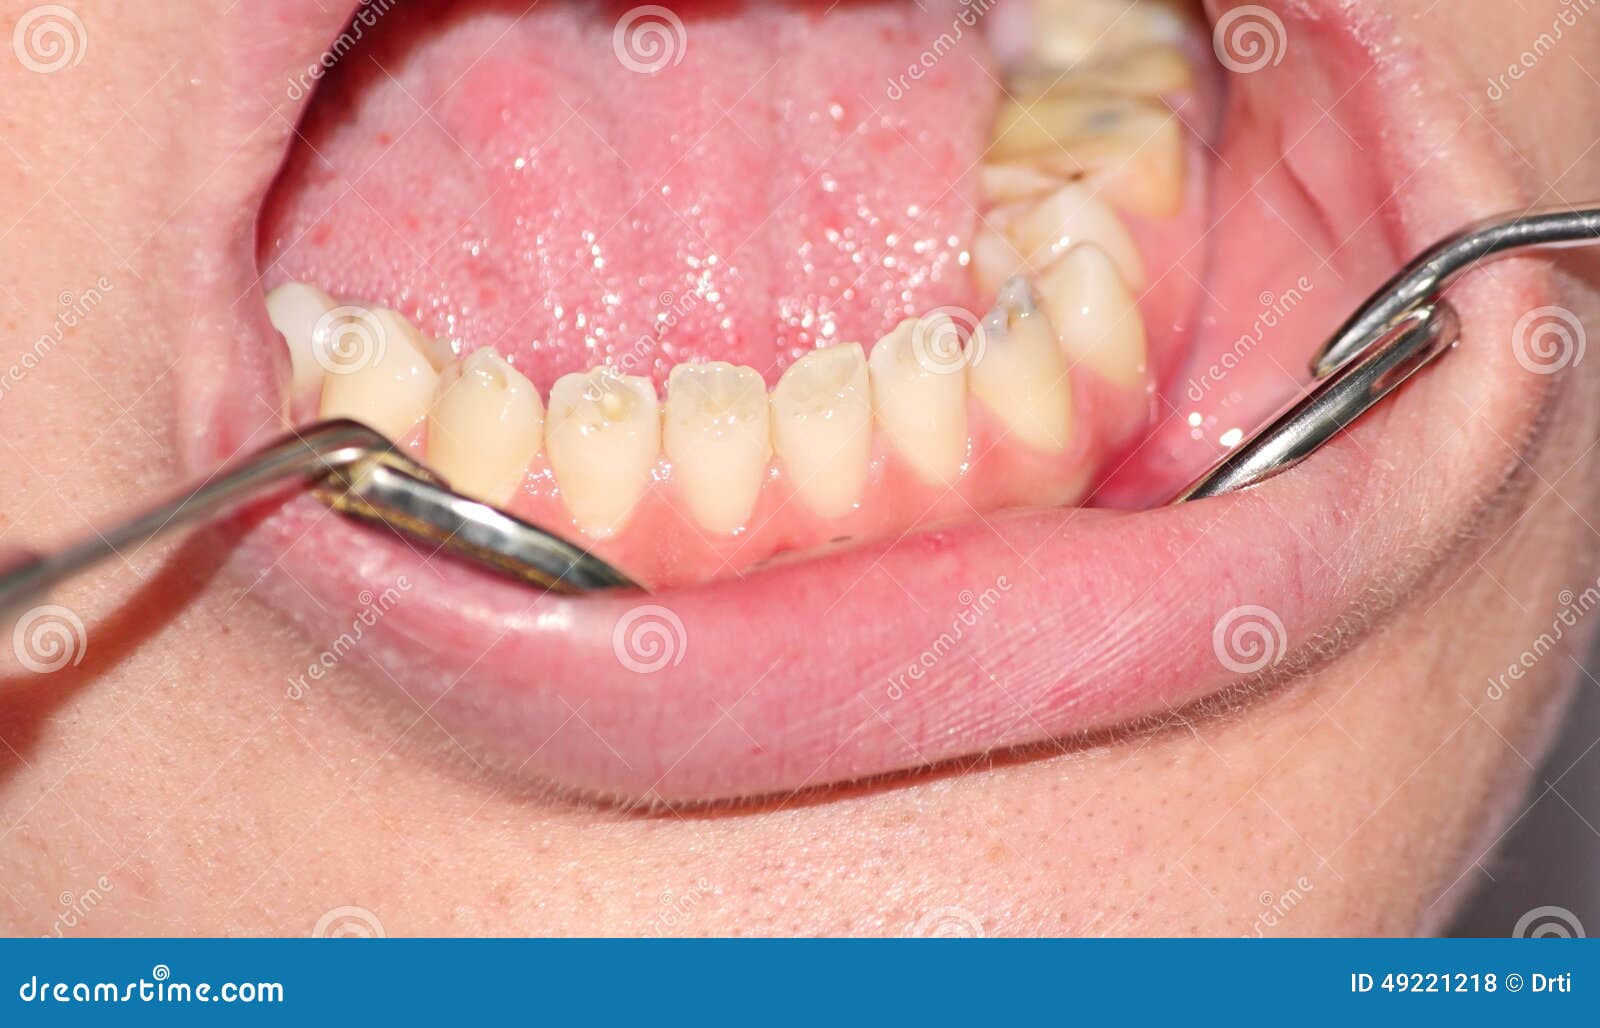 hypoplasia of tooth enamel